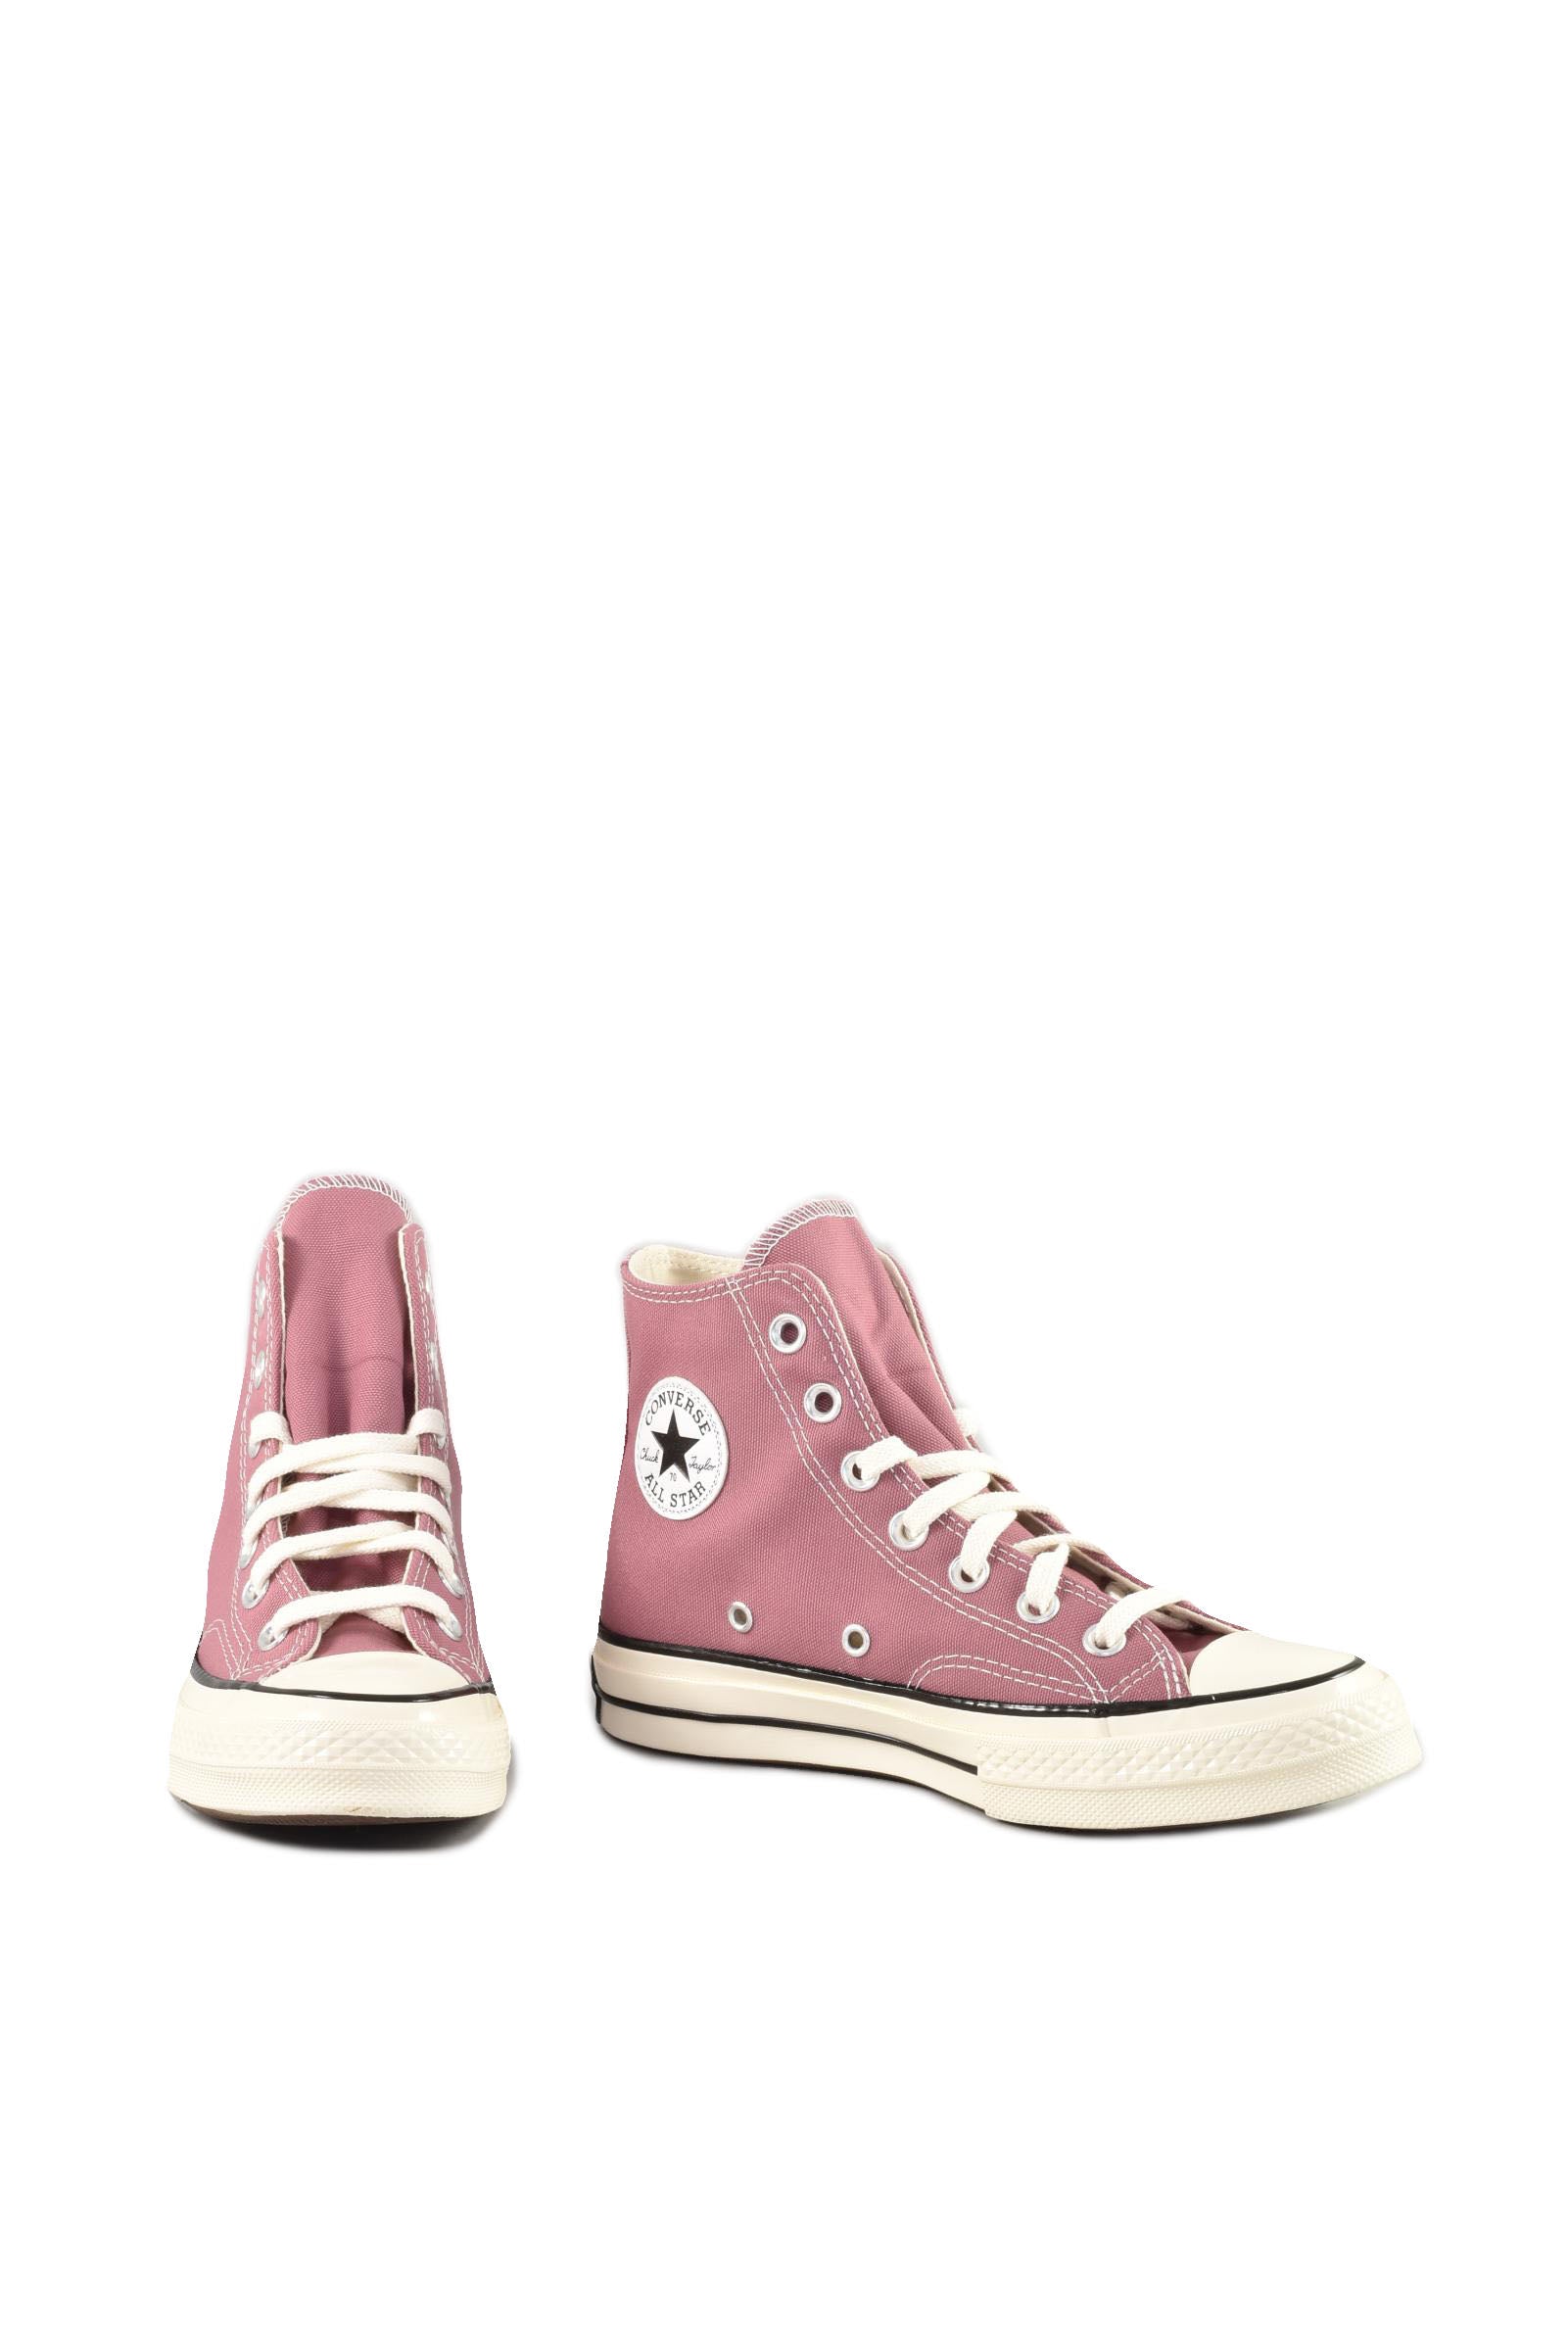 CONVERSE Scarpe sneakers rosa